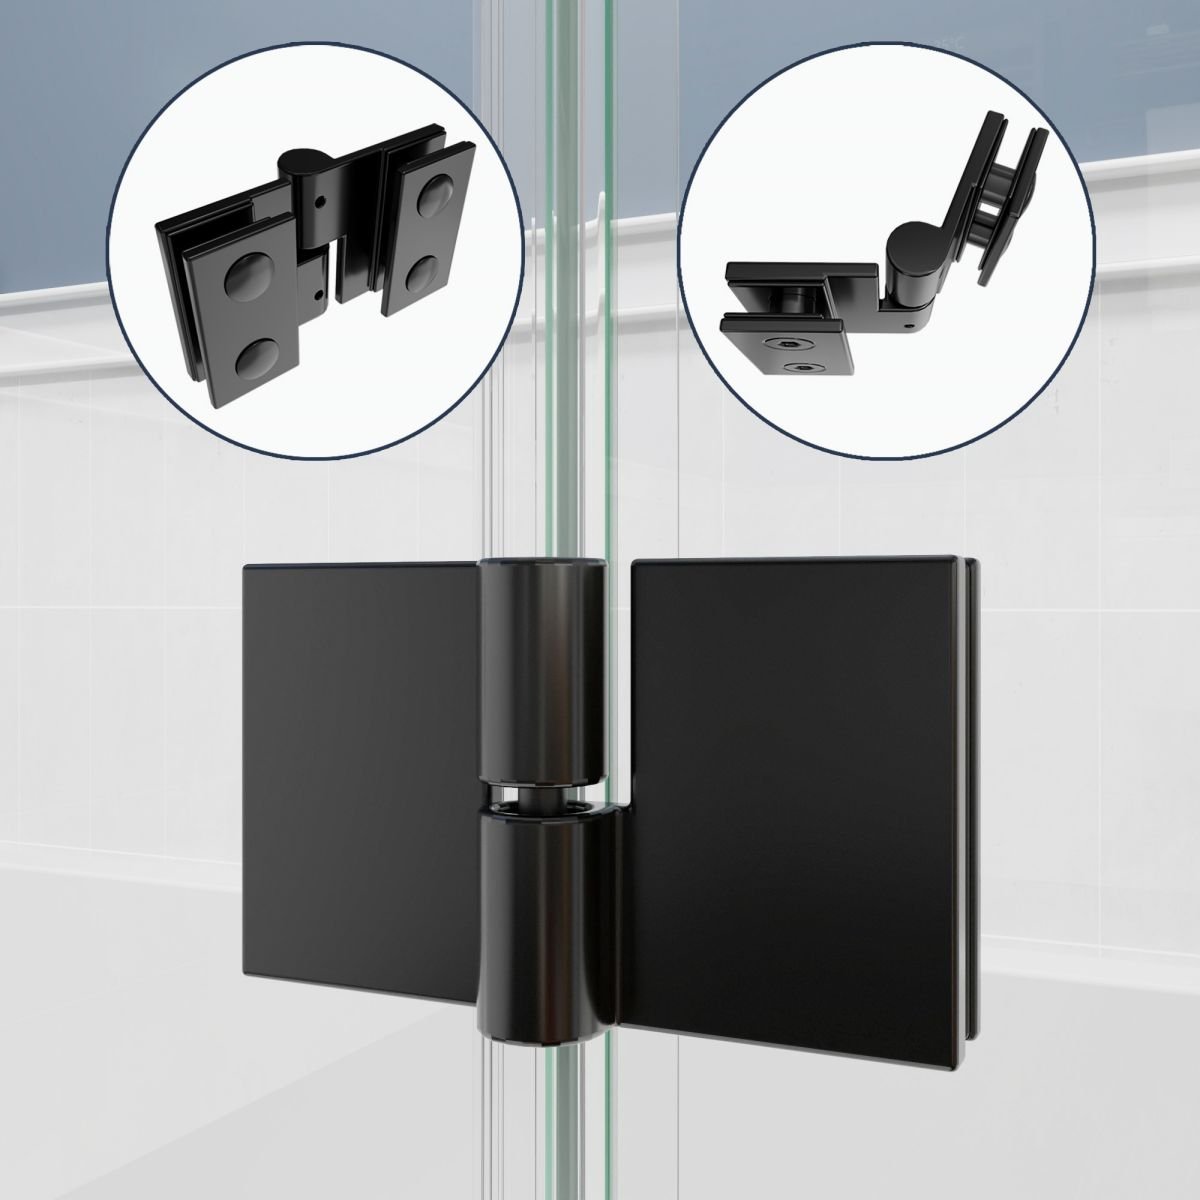 Serenity Folding Shower Door Over Tub,51" W*58" H Pivot Frameless Tub Shower Door,Clear Tempered Glass Shower Screen Panel,Matte Black